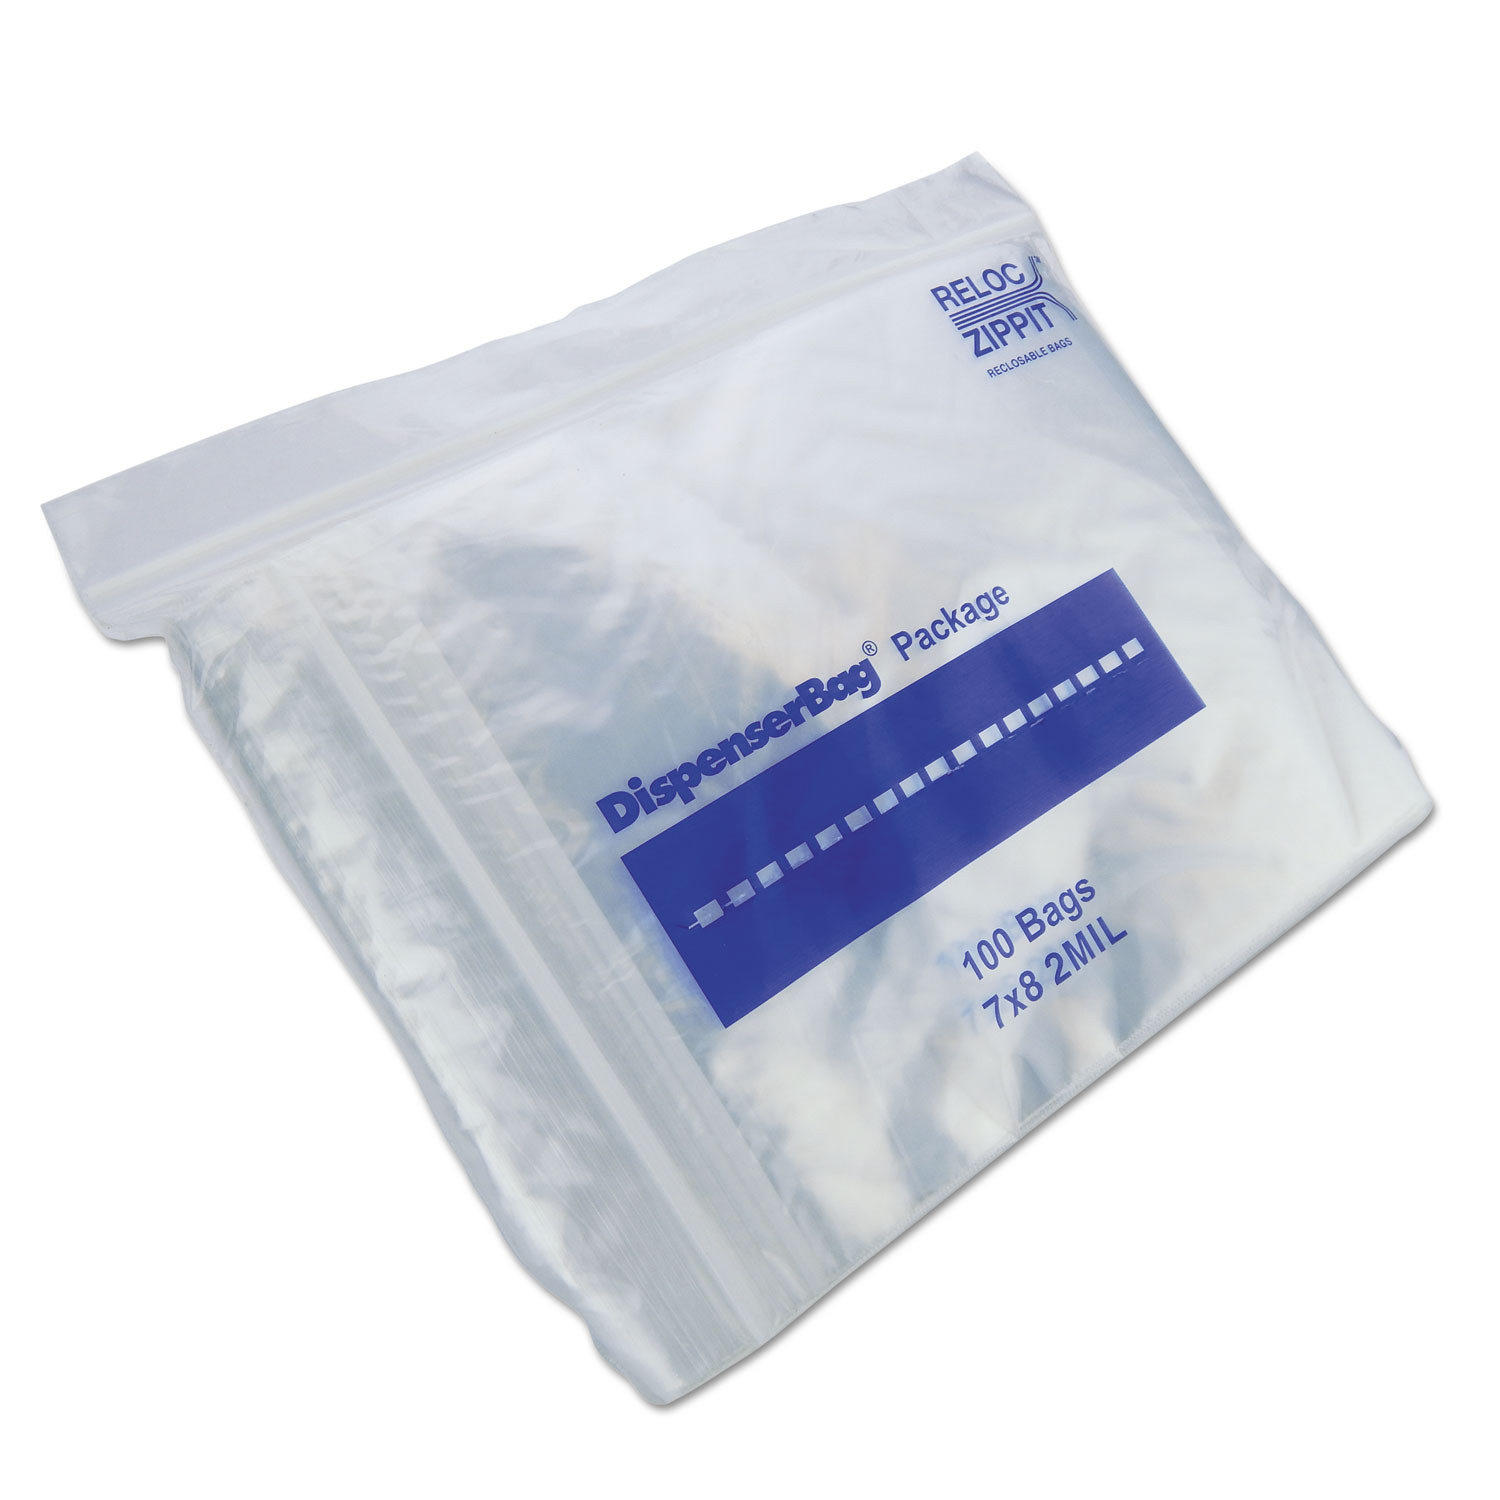 Reclosable Plastic Zipper Bags 2 Mil, Clear. (100 Bags)